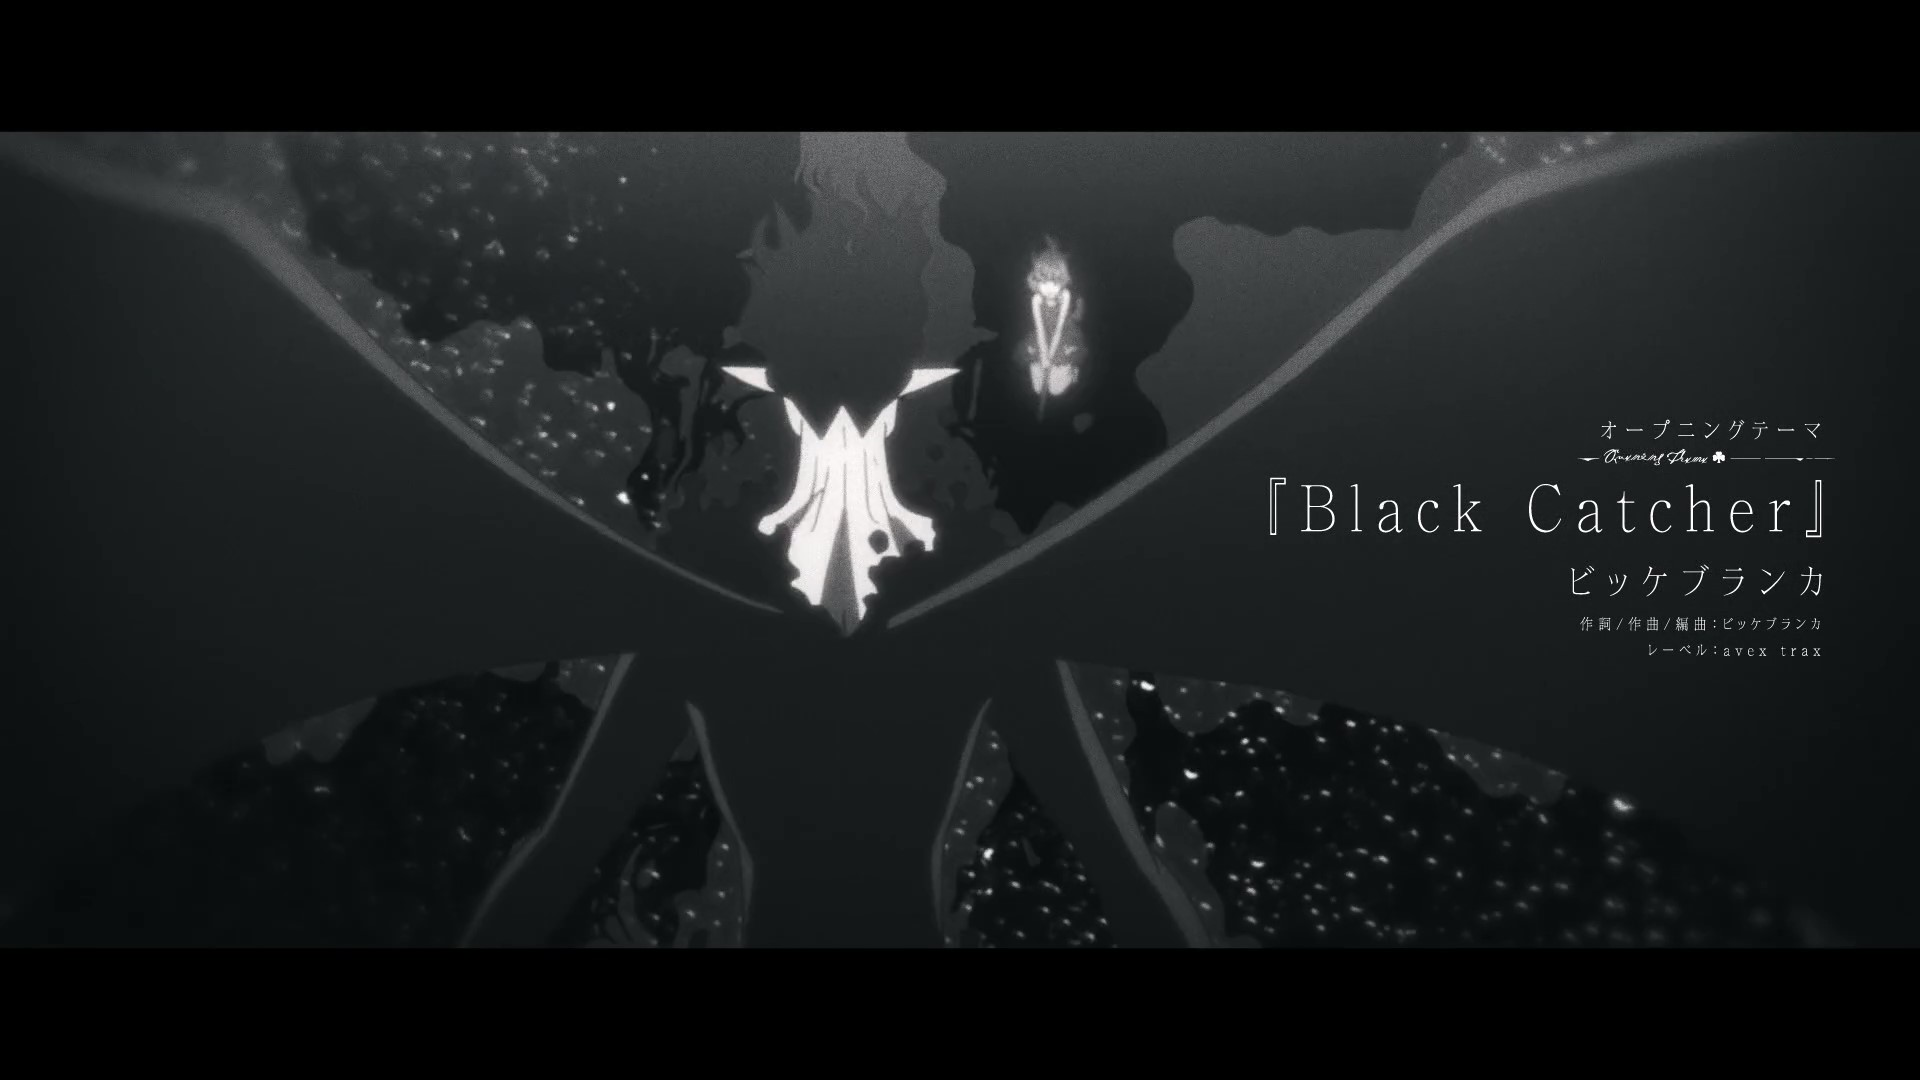 Black Clover - Opening 10, Black Catcher 